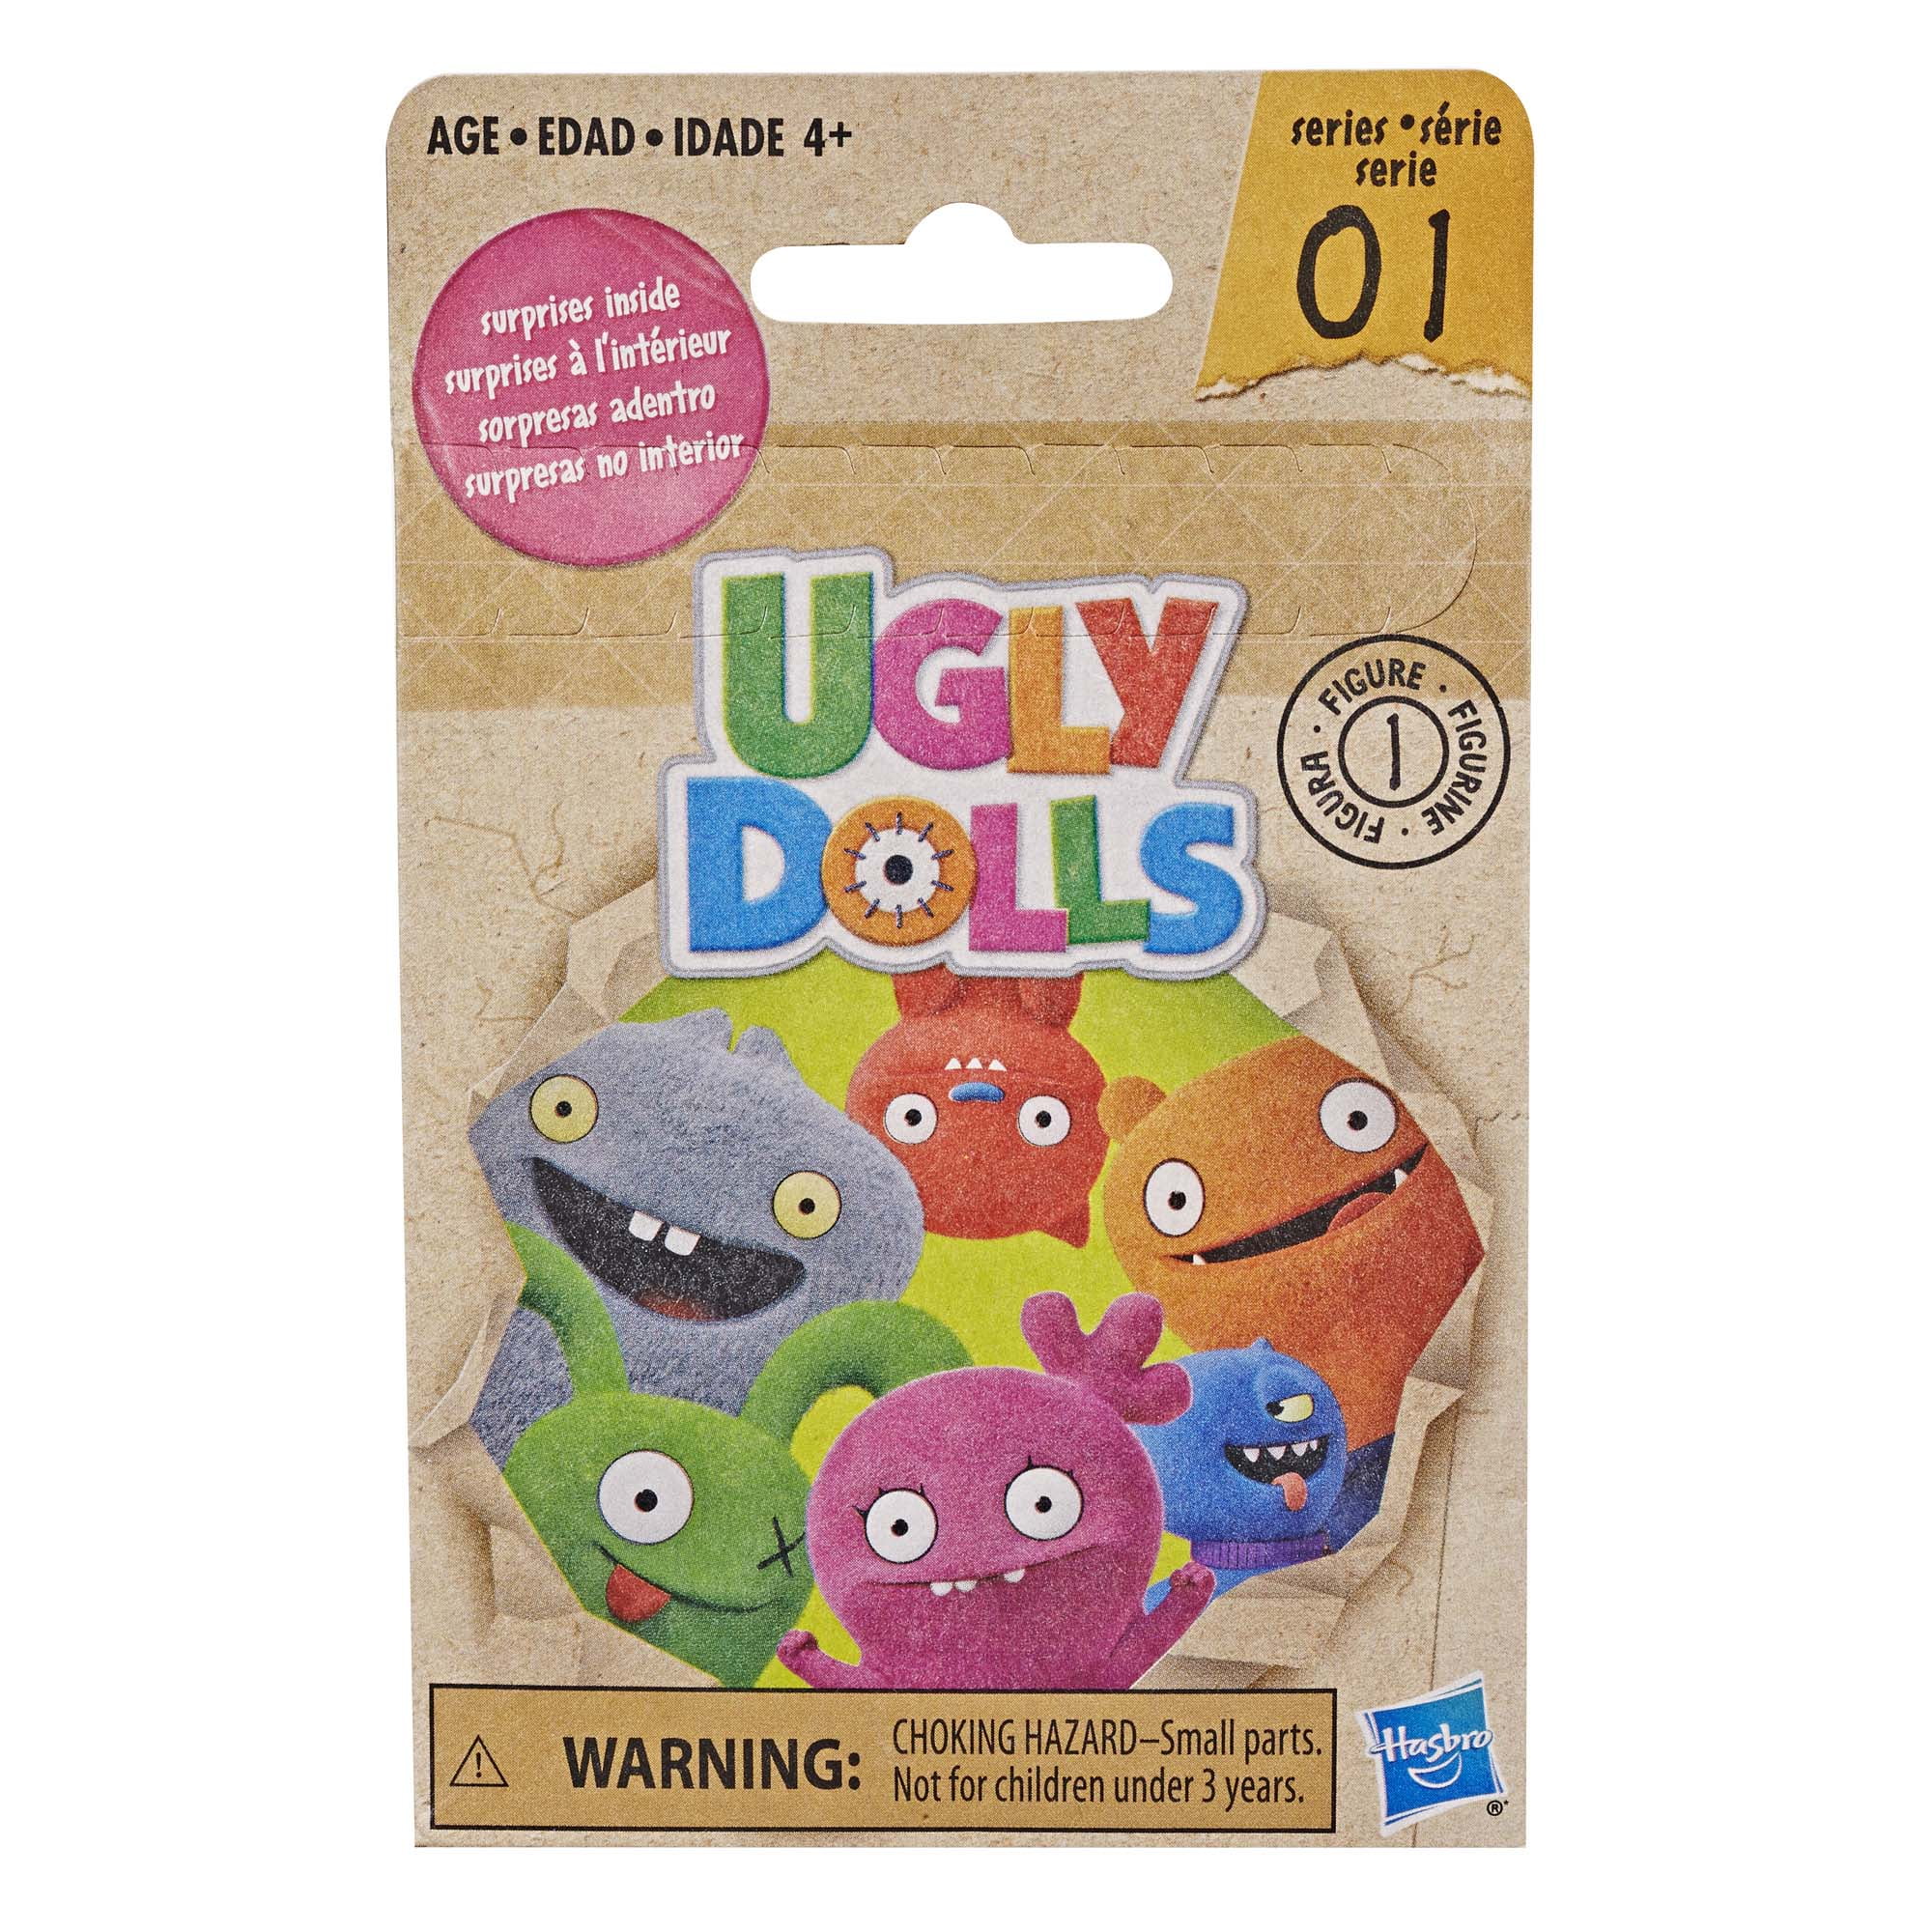 Uglydolls Ugly Dolls Artist Series 1 Mini 5" Stuffed Plush Toy Hasbro for sale online 